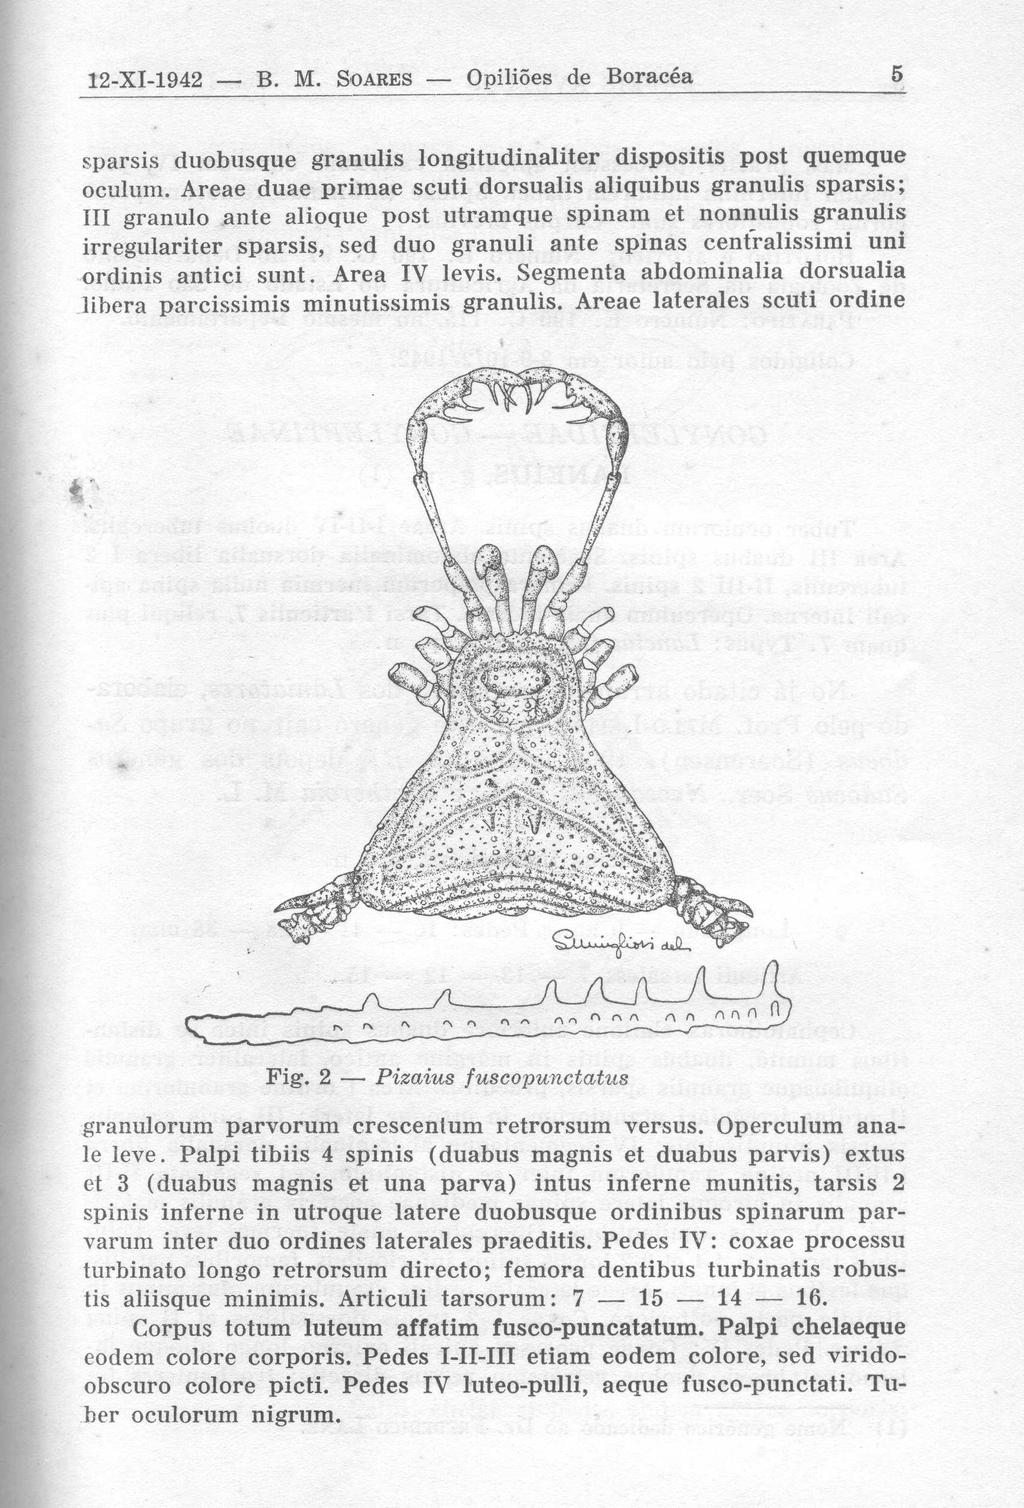 12-XI-1942 B. M. SOARES Opiliões de Boracéa sparsis duobusque granulis longitudinaliter dispositis post quemqu e oculum.